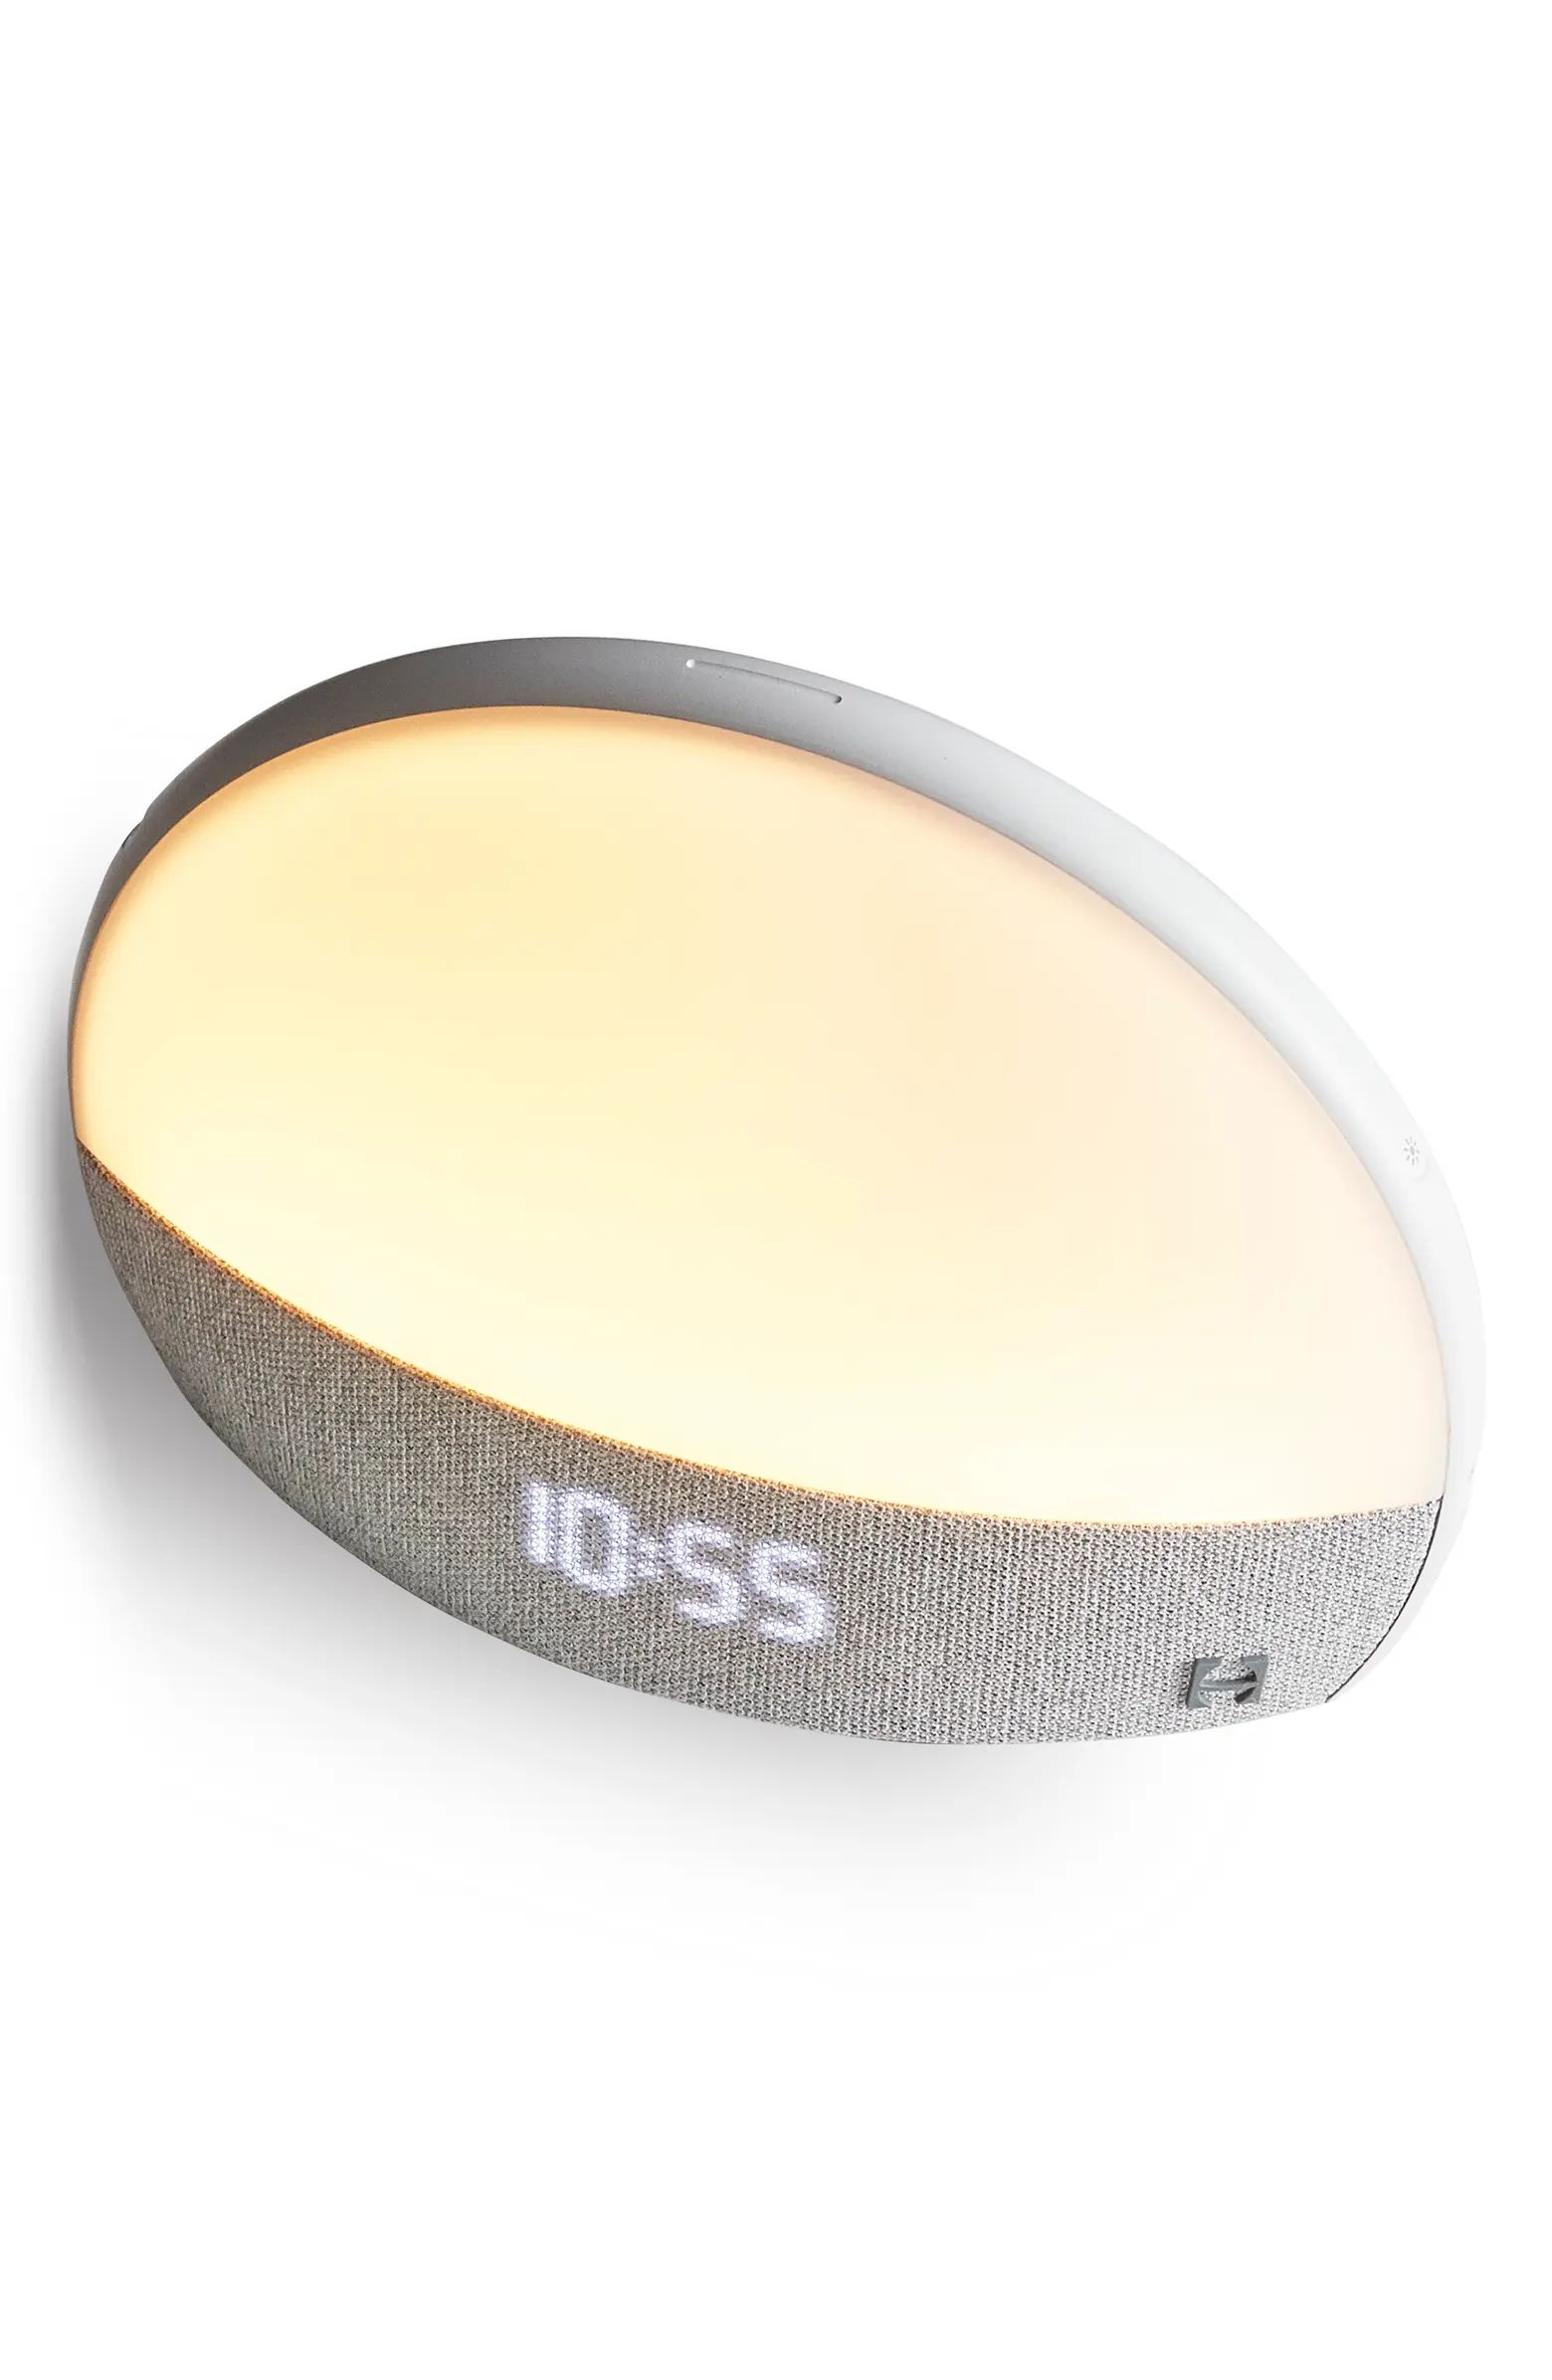 Restore Reading Light, Sound Machine & Sunrise Alarm Clock | Nordstrom